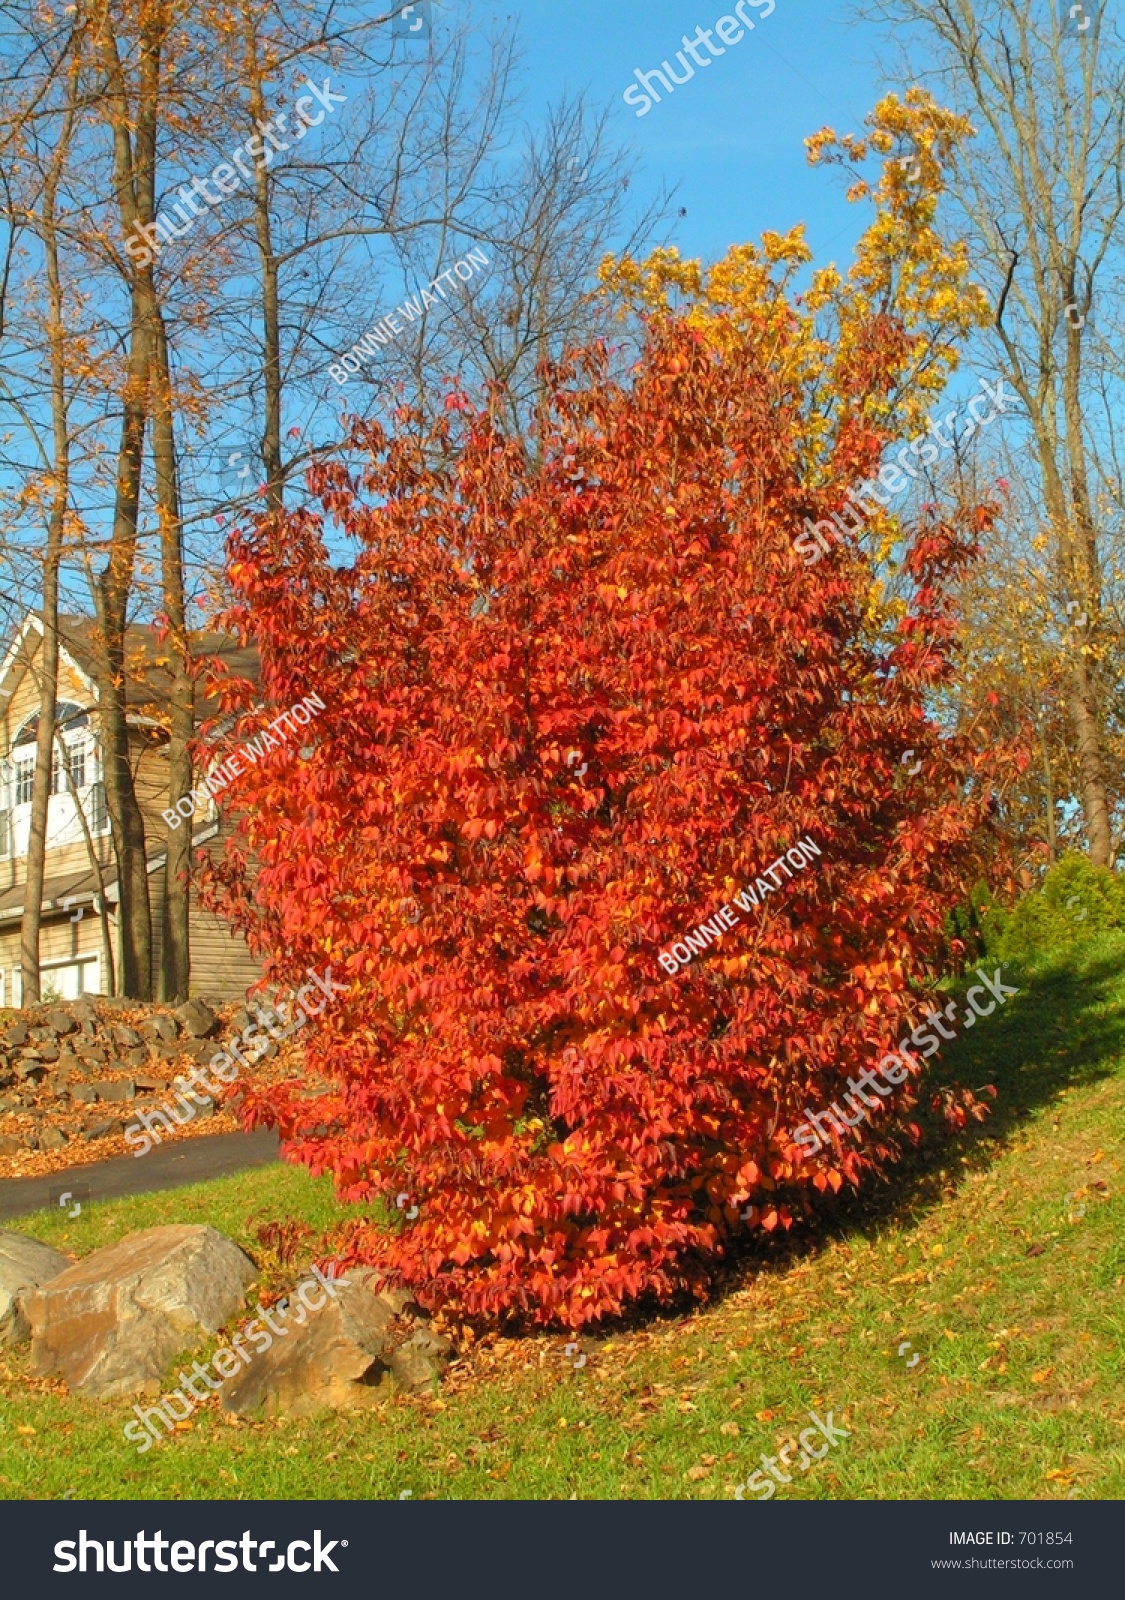 Kousa Dogwood Tree With Red Fall Foliage Stock Photo 701854 : Shutterstock